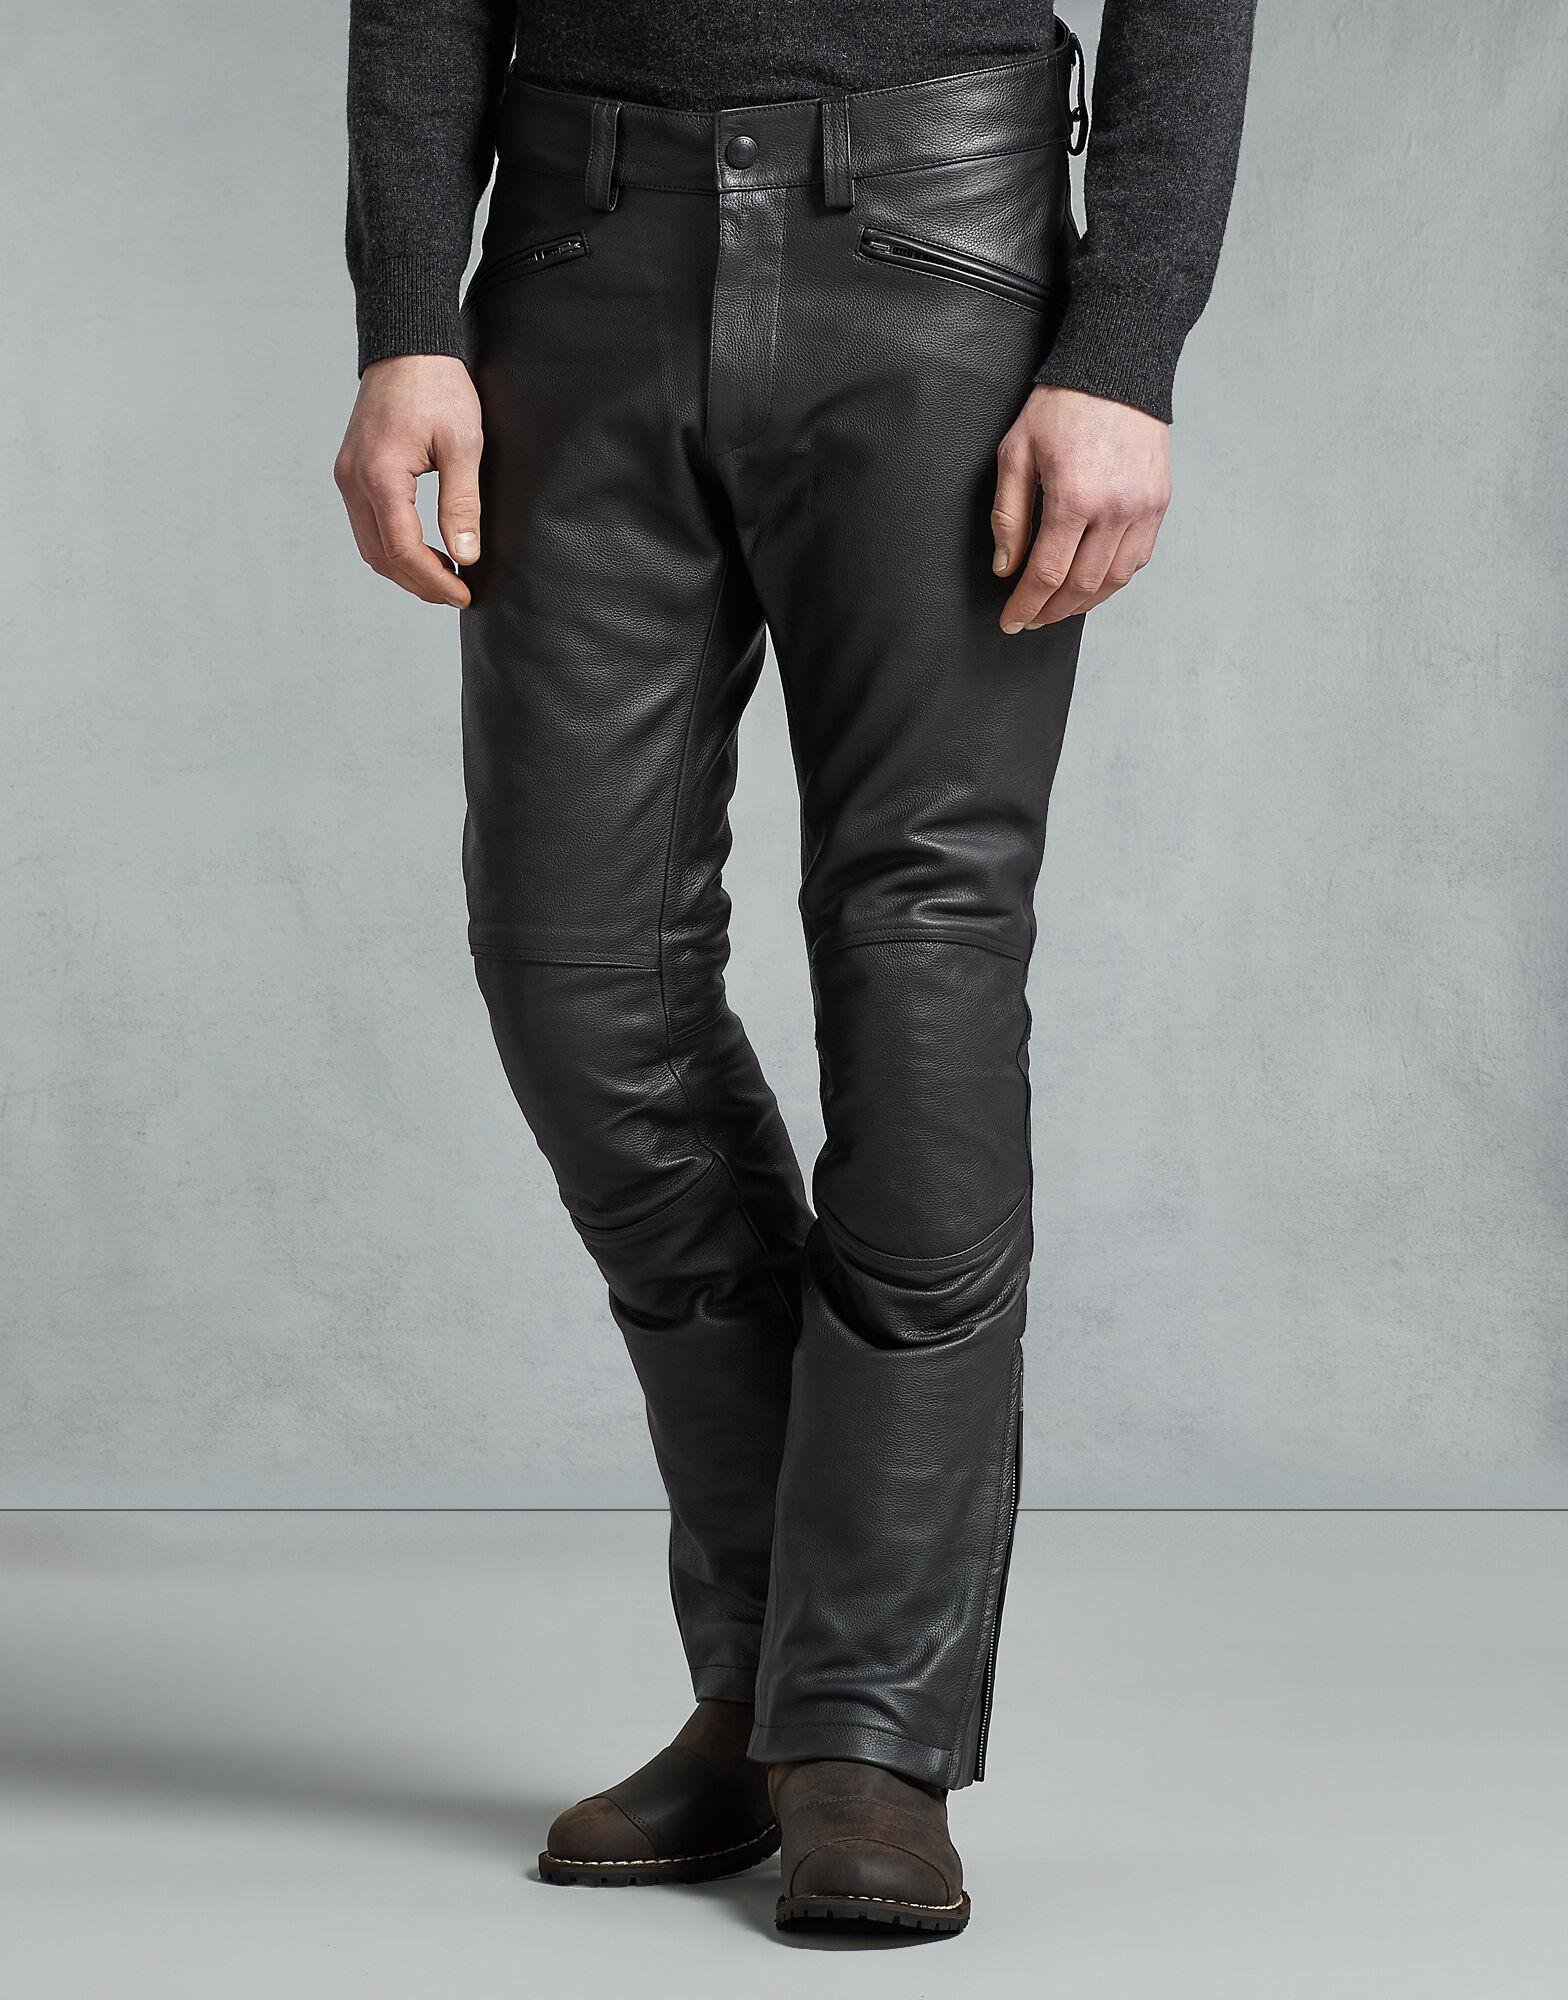 Belstaff Fender Leather Trousers in Black for Men - Lyst